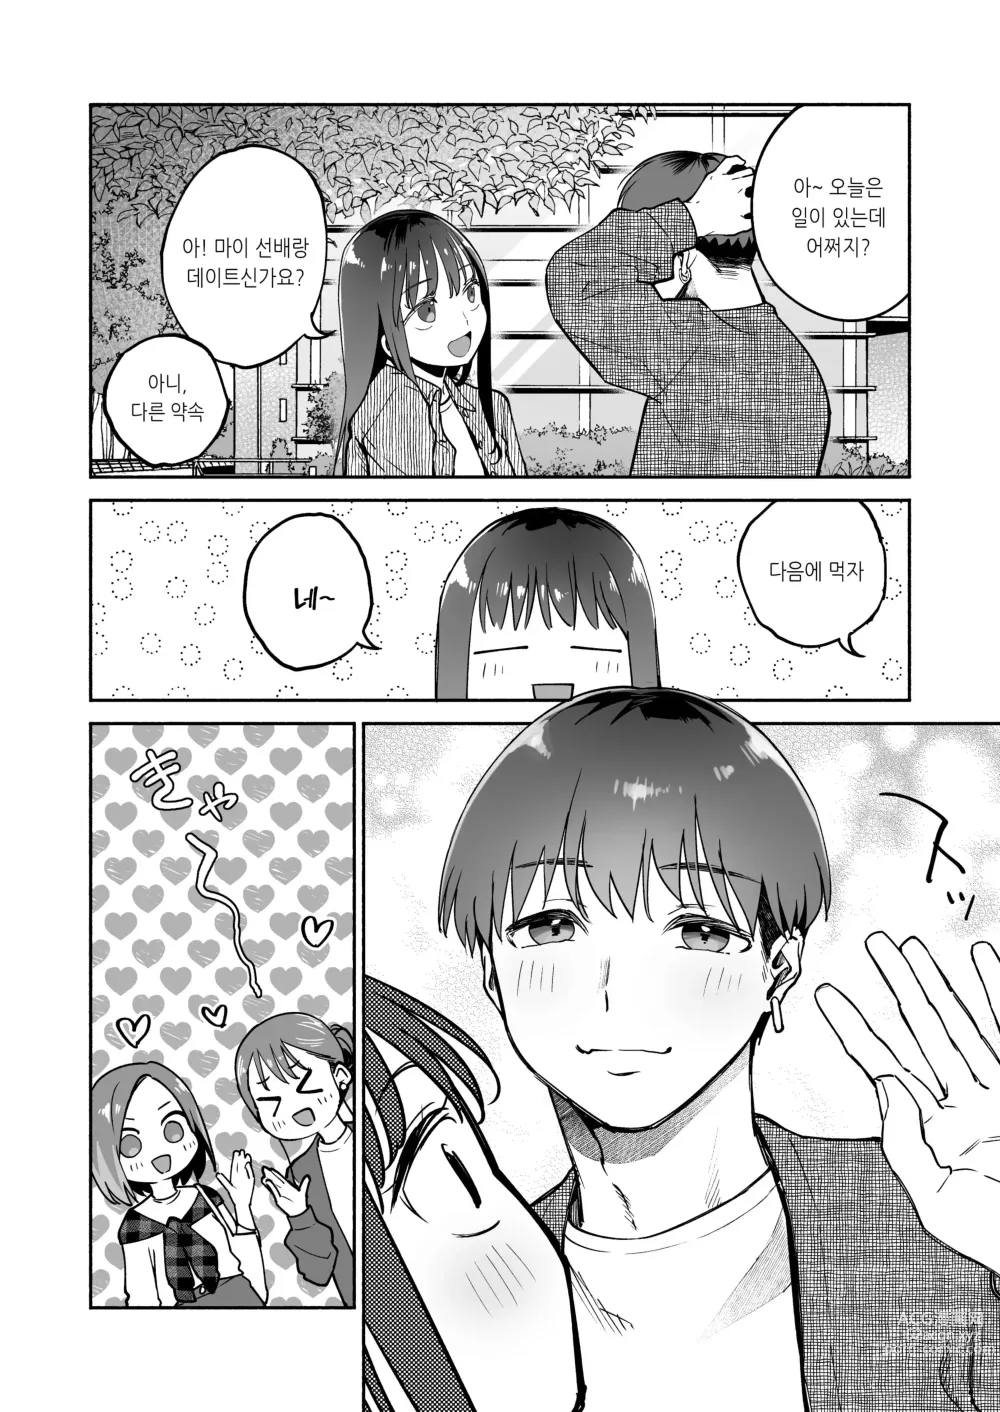 Page 3 of doujinshi 학력, 외모 무엇이든 뒤떨어지는 아저씨 전용 오나홀이 되었습니다.